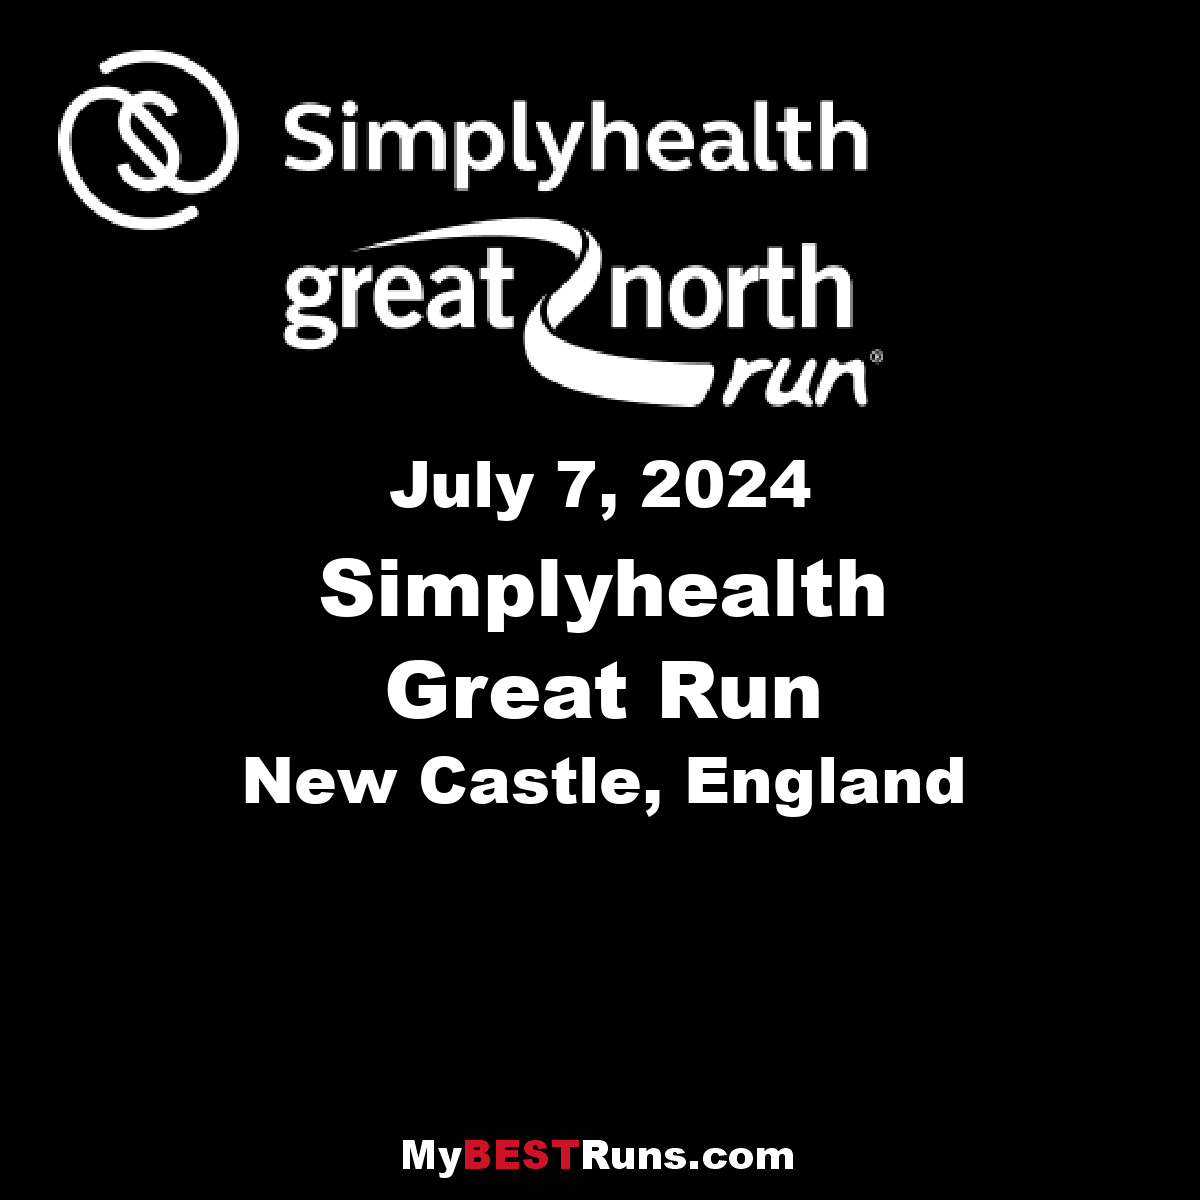 Simplyhealth Great North Run